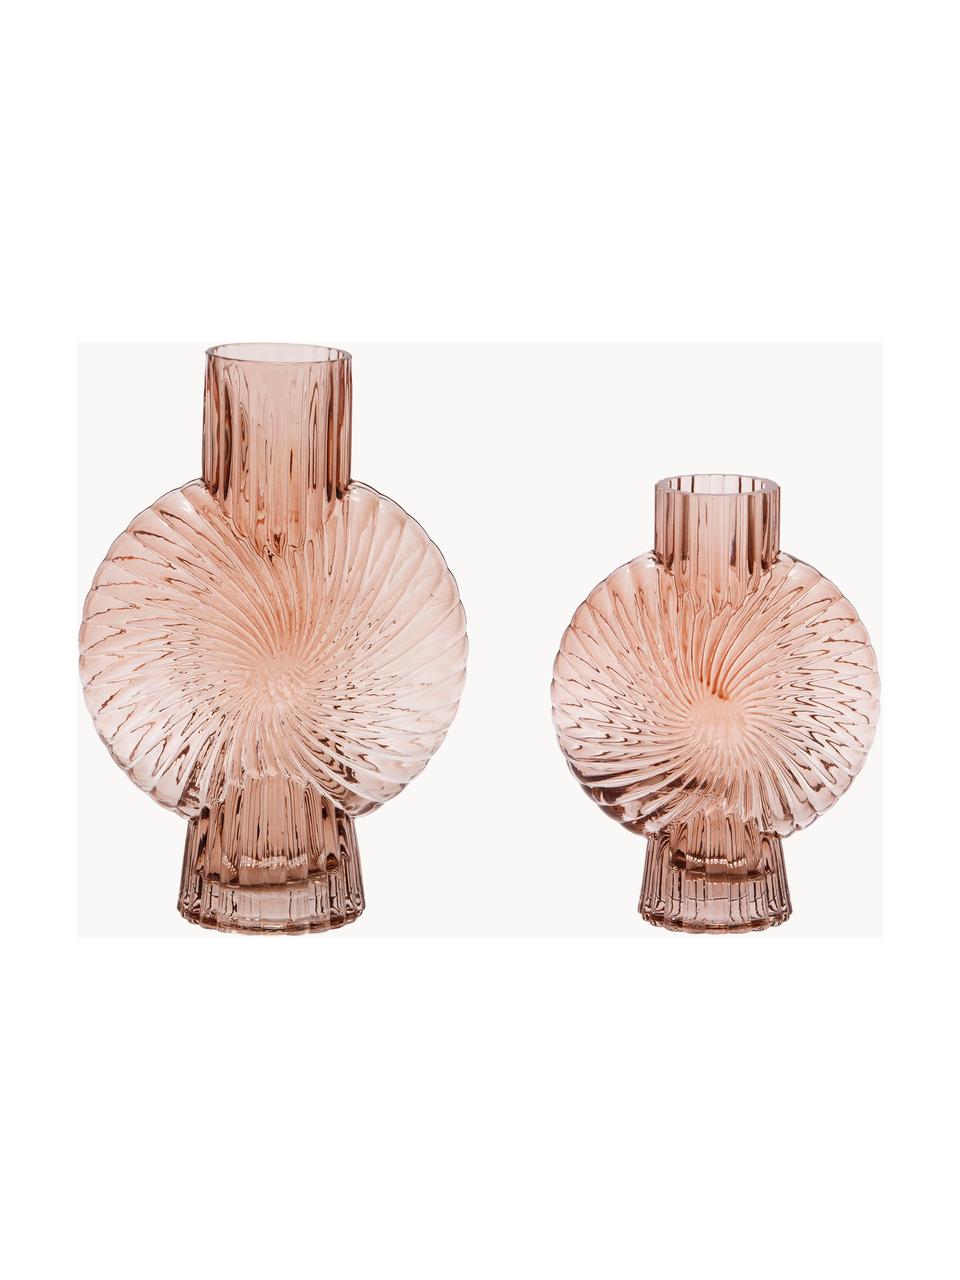 Große Design-Vase Galaxy, Glas, Apricot, B 23 x H 32 cm